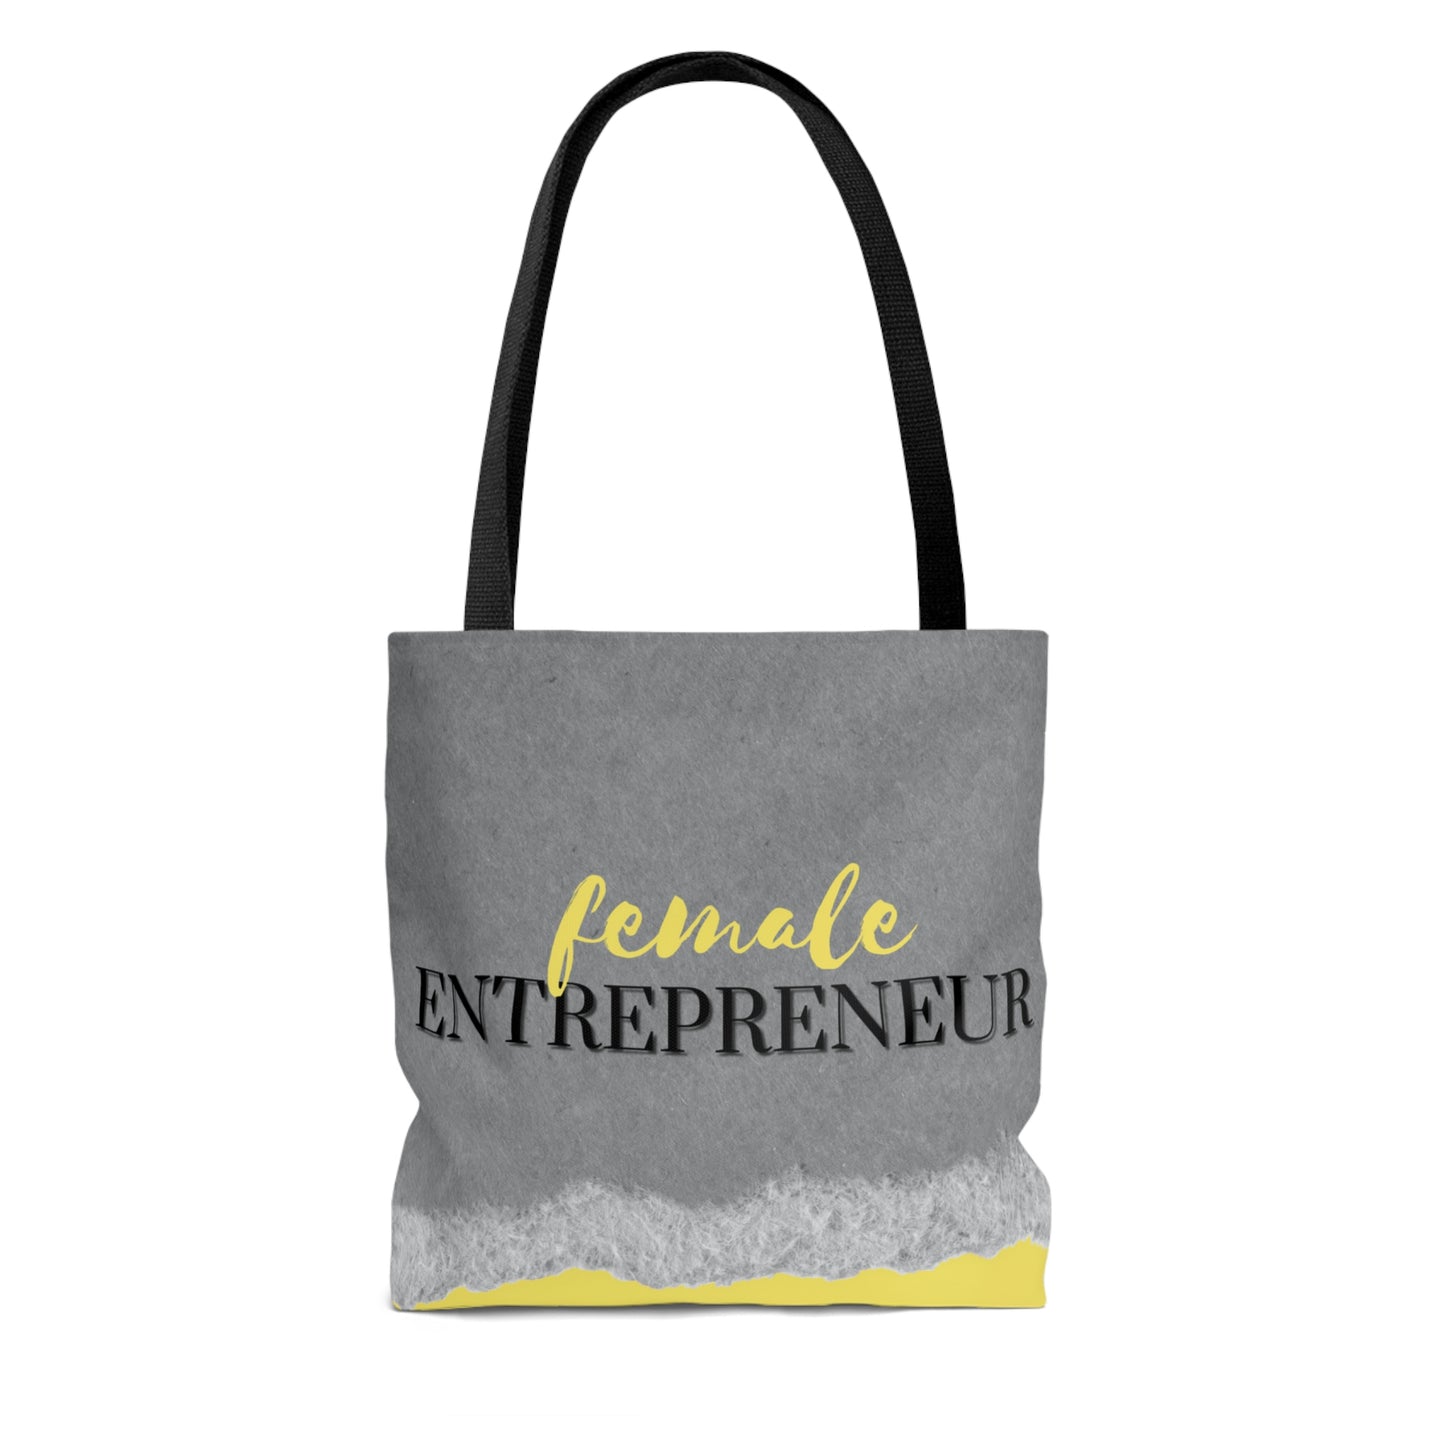 Female Entrepreneur (Yellow and Gray) Tote Bag